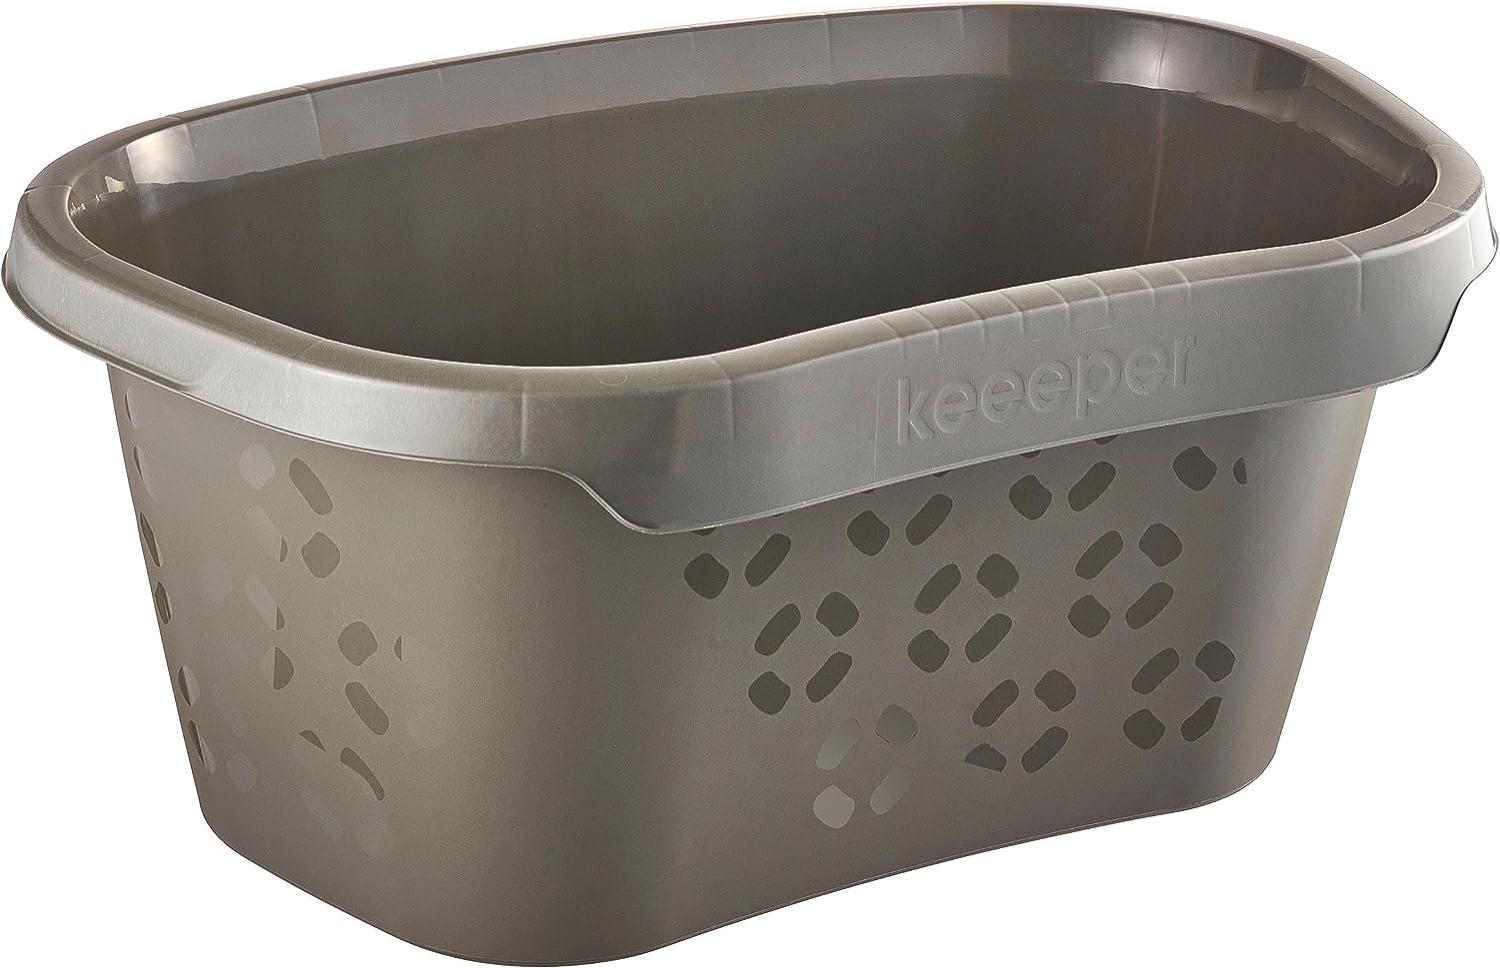 keeeper Wäschewanne ''tilda eco'', Breite: 575 mm, grau Farbe: eco-grey, aus 100% Recyclingkunststoff, - 1 Stück (1009213800000) Bild 1